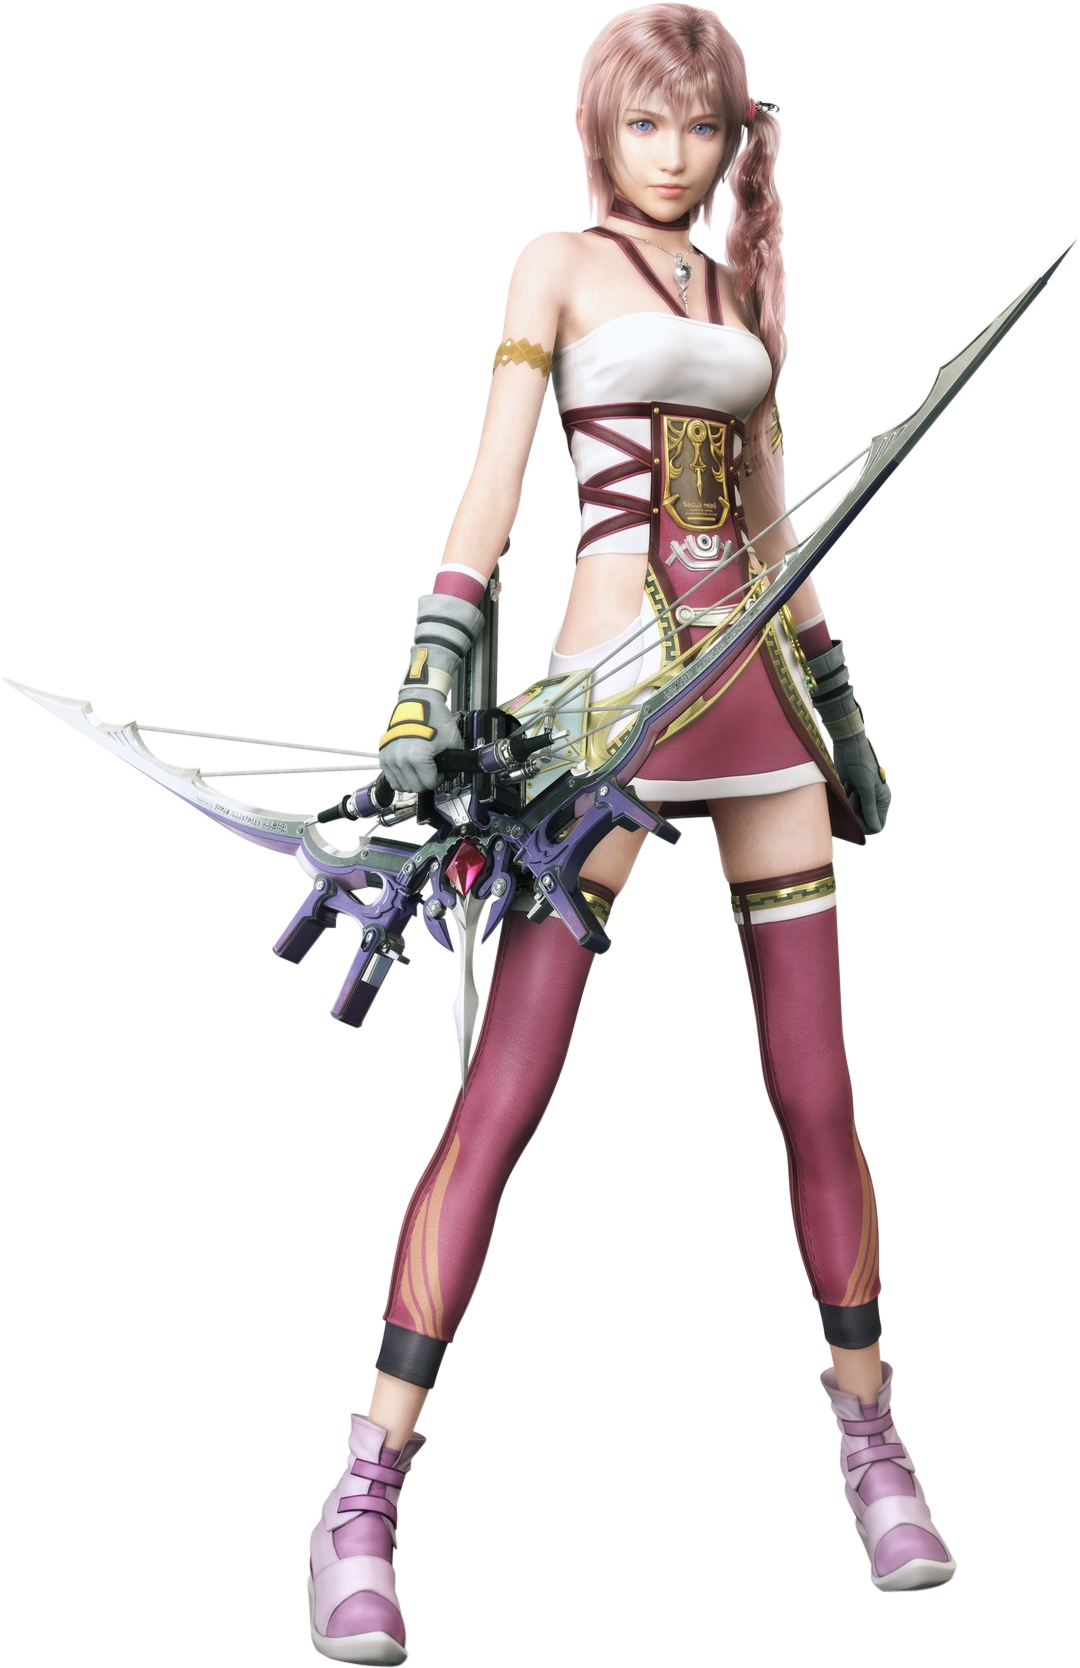 0032 August 23 2011 Final Fantasy 13 2 Serah - Final Fantasy Xiii-2 Ff 13-2 Serah Farron Cosplay Costume (1280x1920)